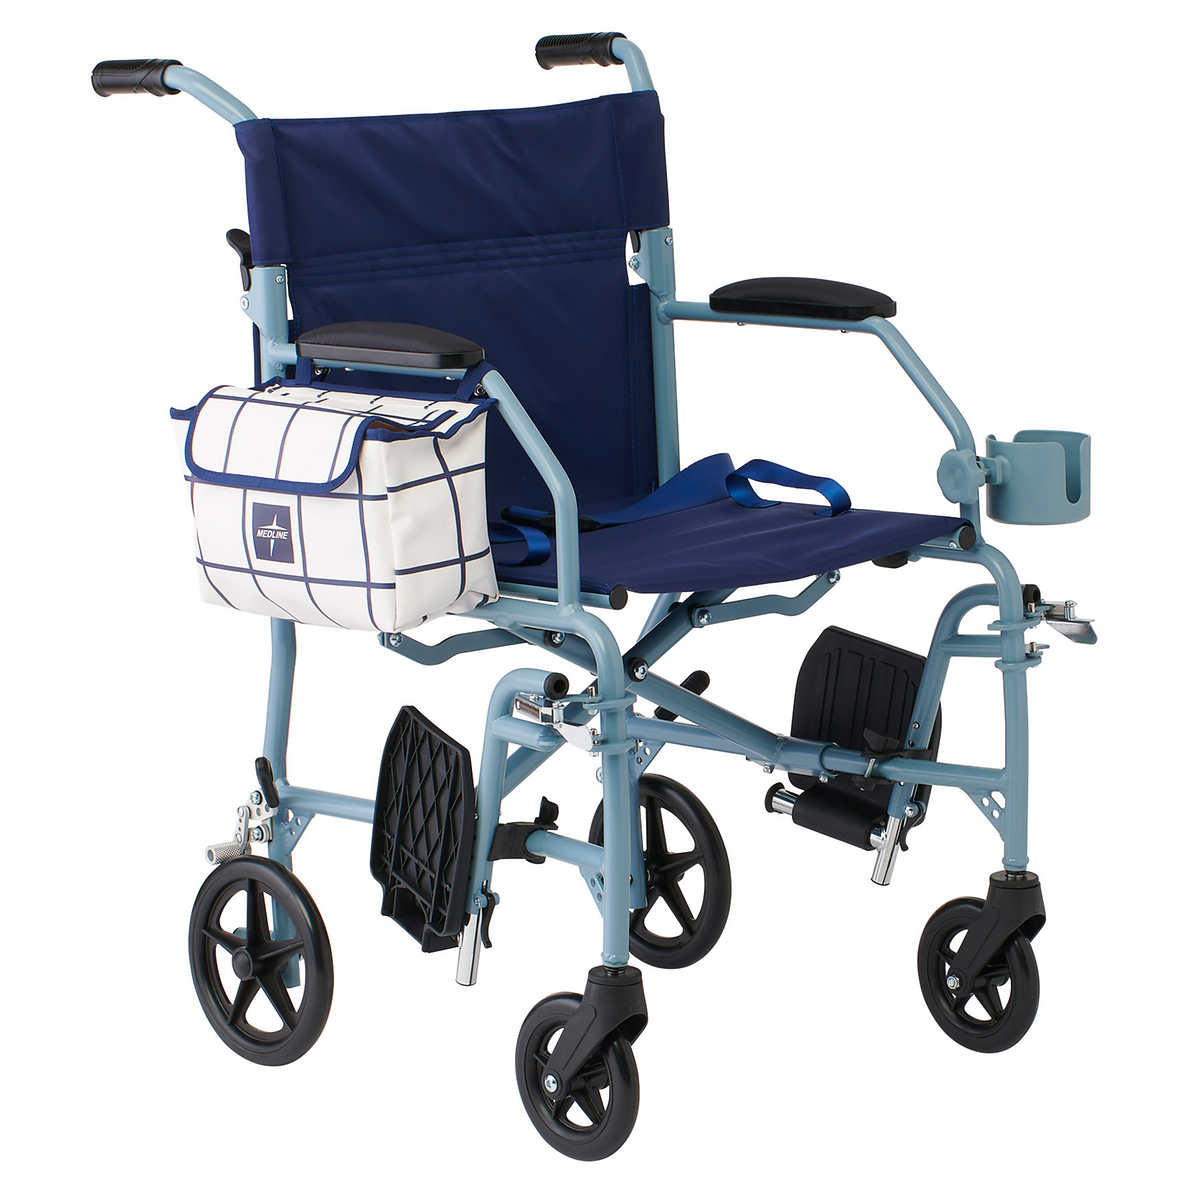 Freedom 3 Transport Wheelchair By Medline Costco